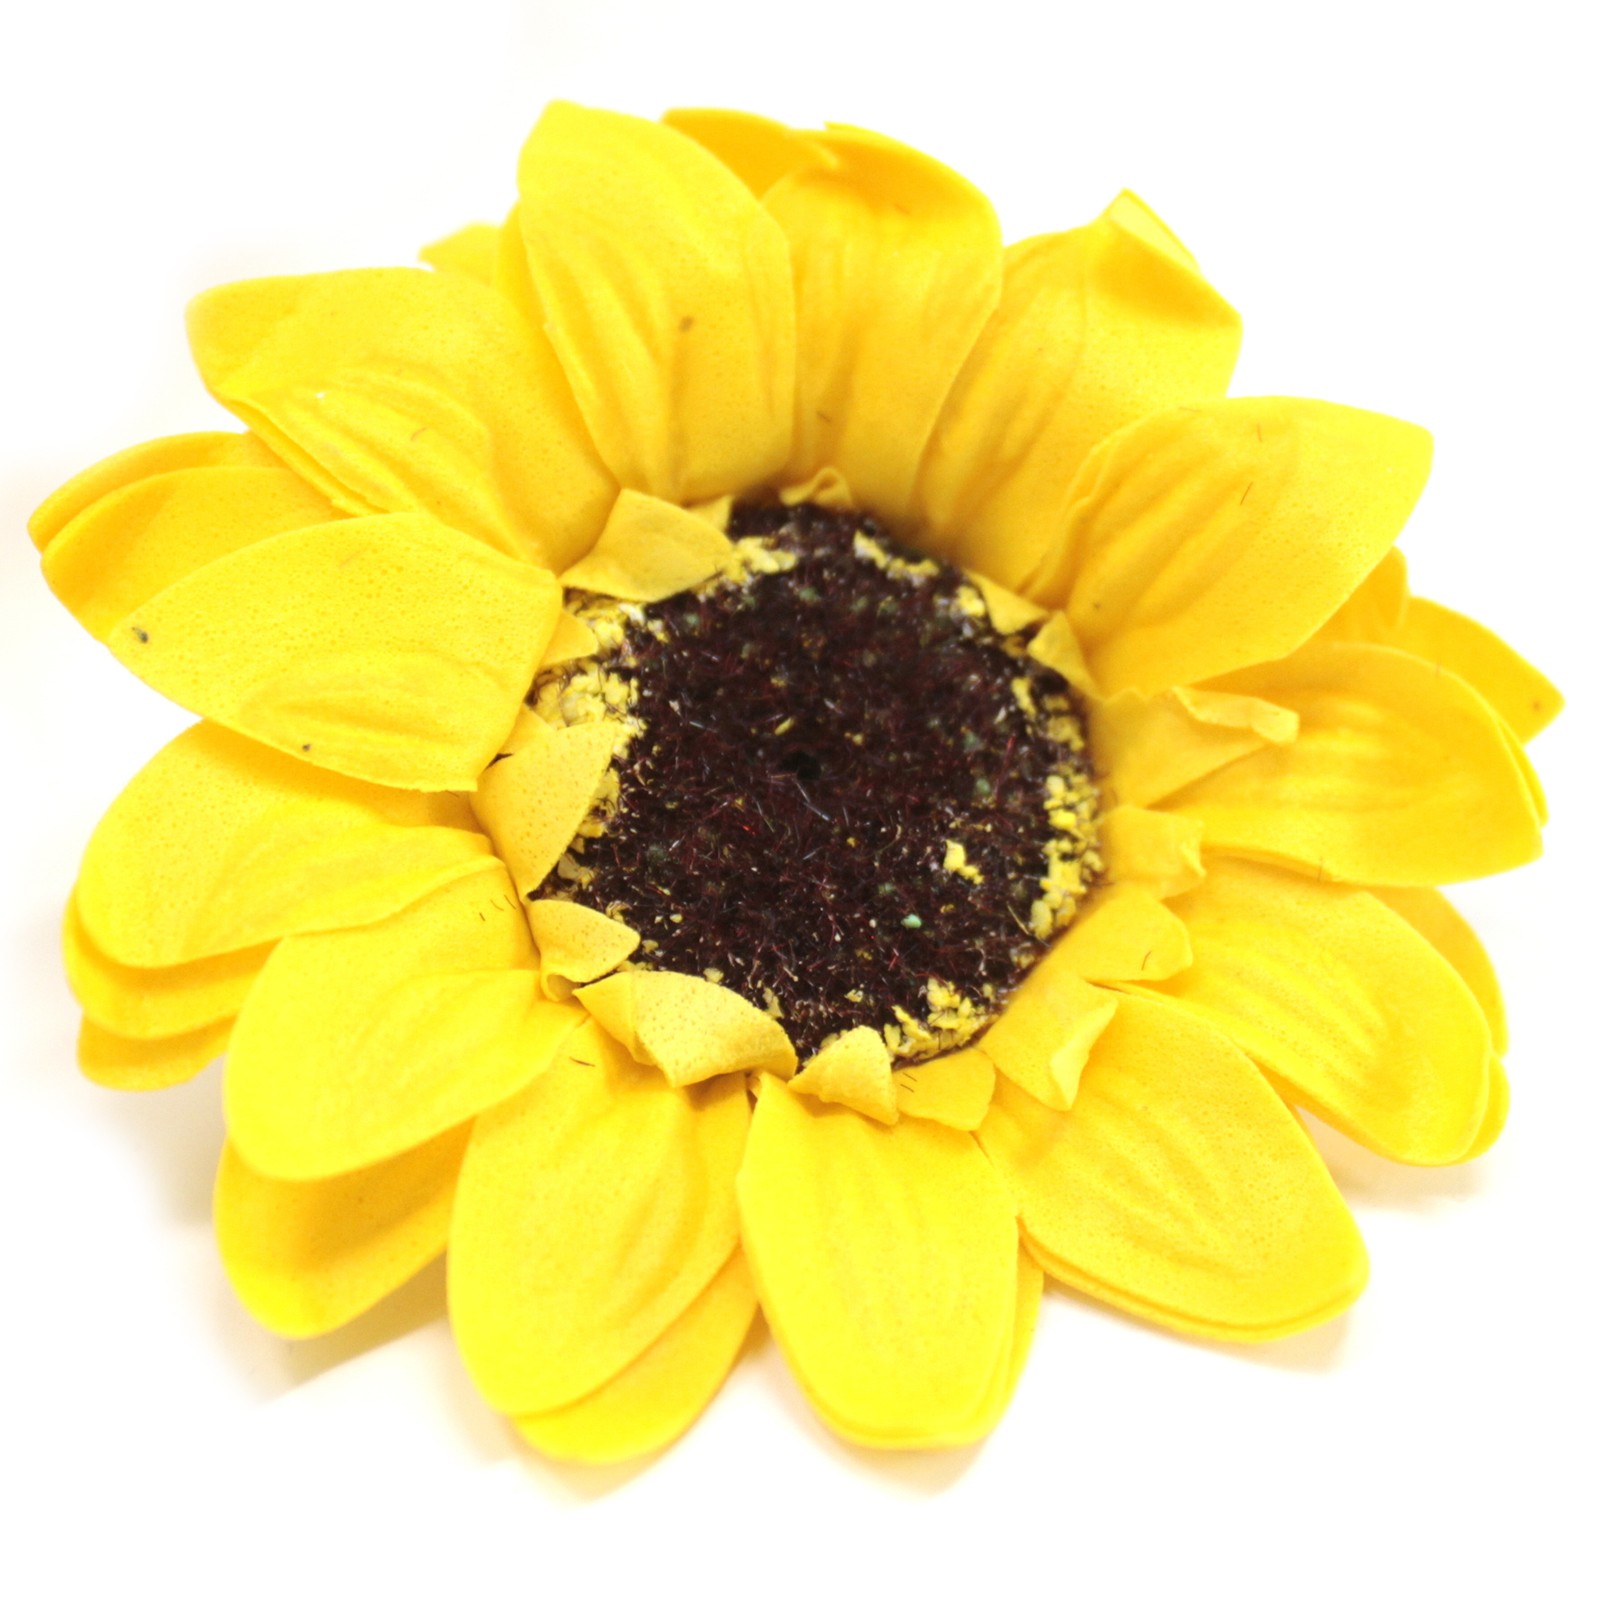 10 x Craft Soap Flowers - Lrg Sunflower - Yellow